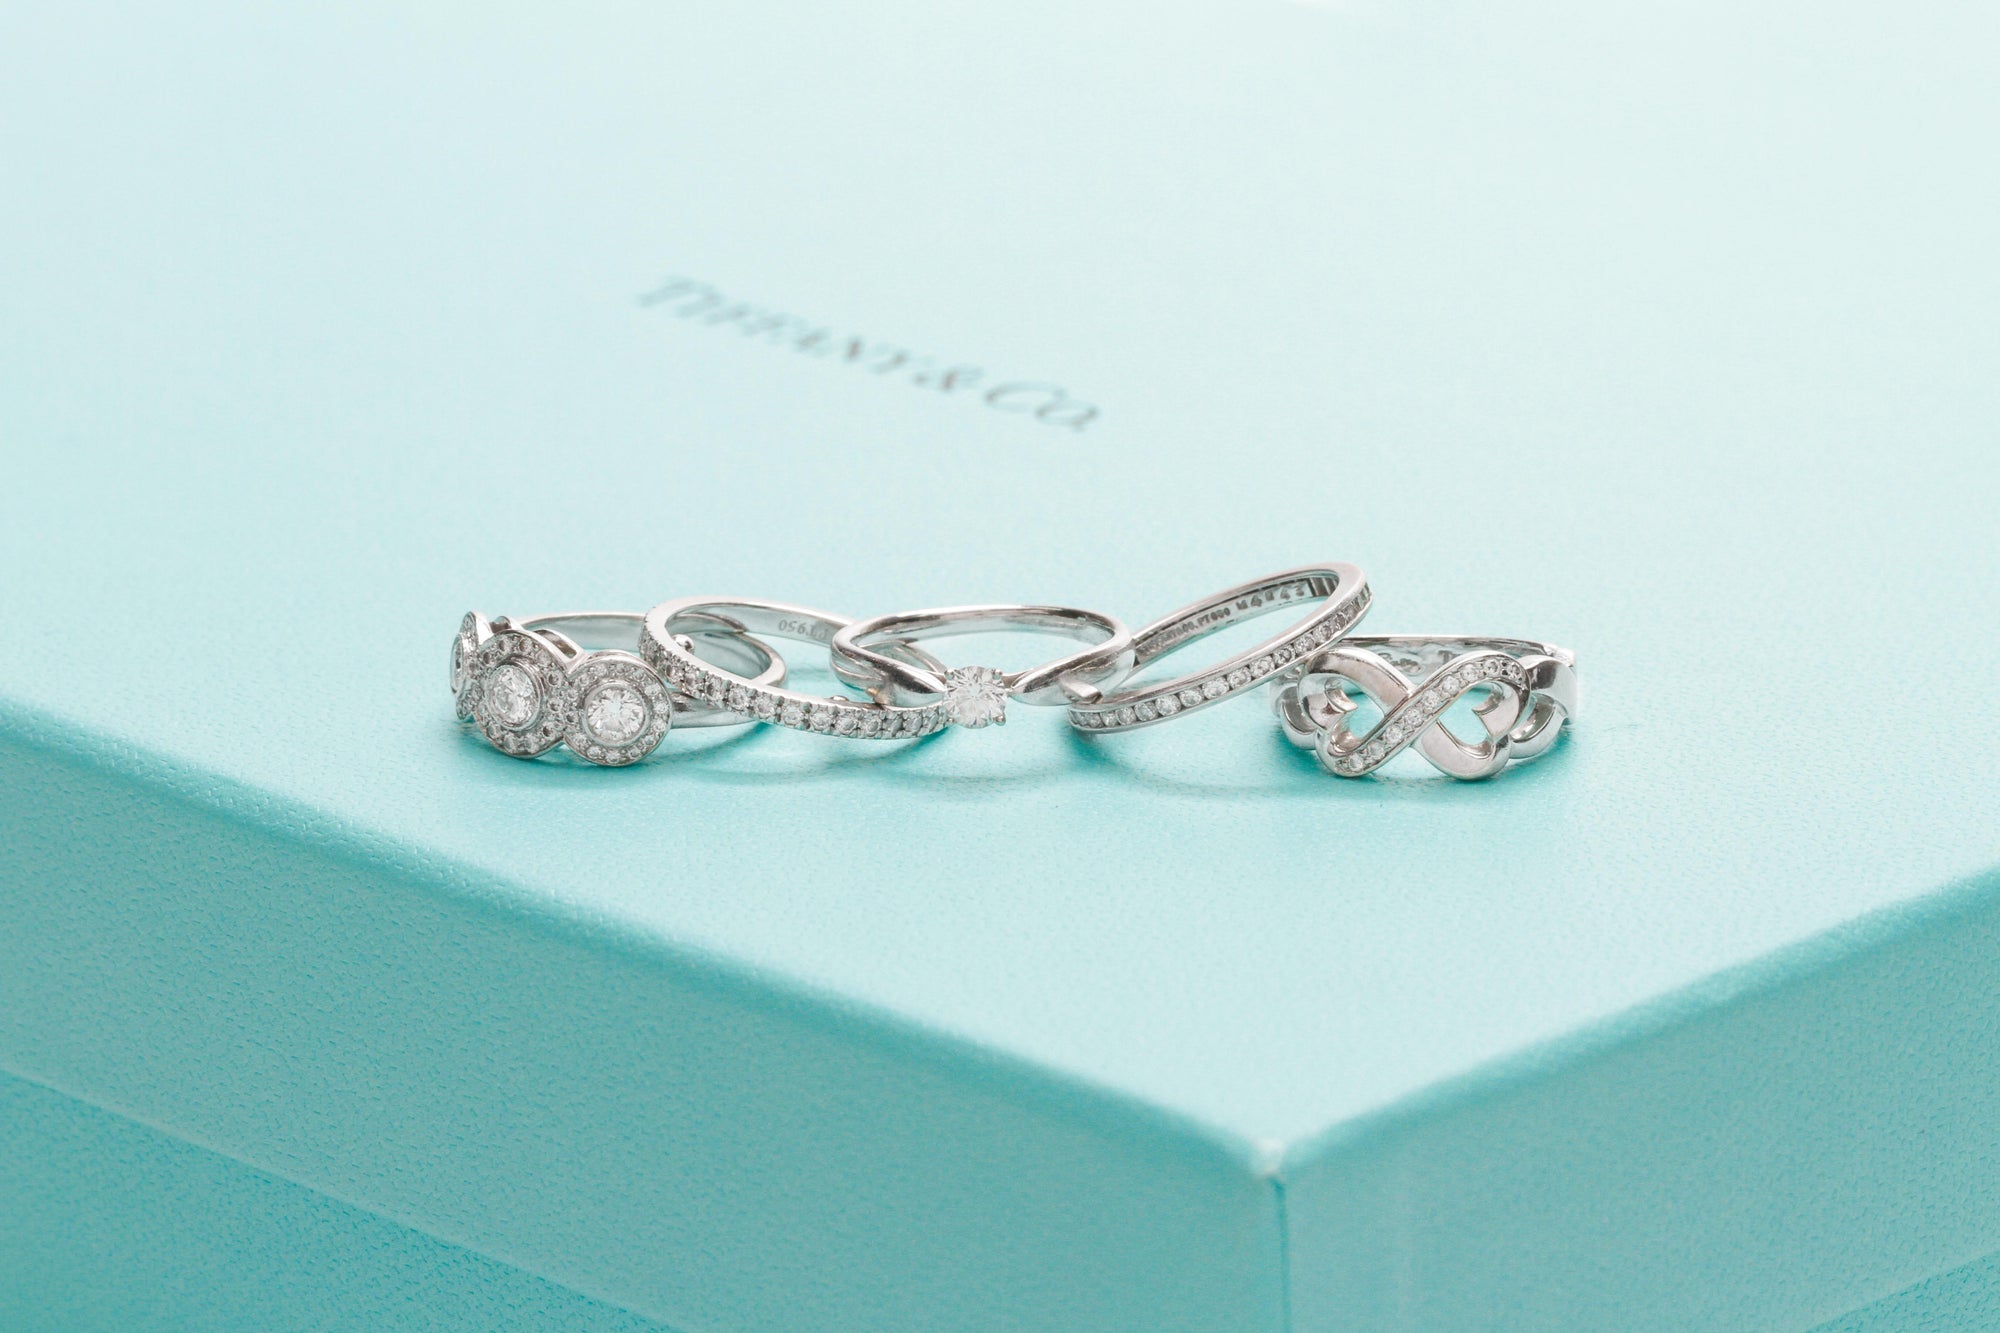 Tiffany & Co. Box and Jewelry 